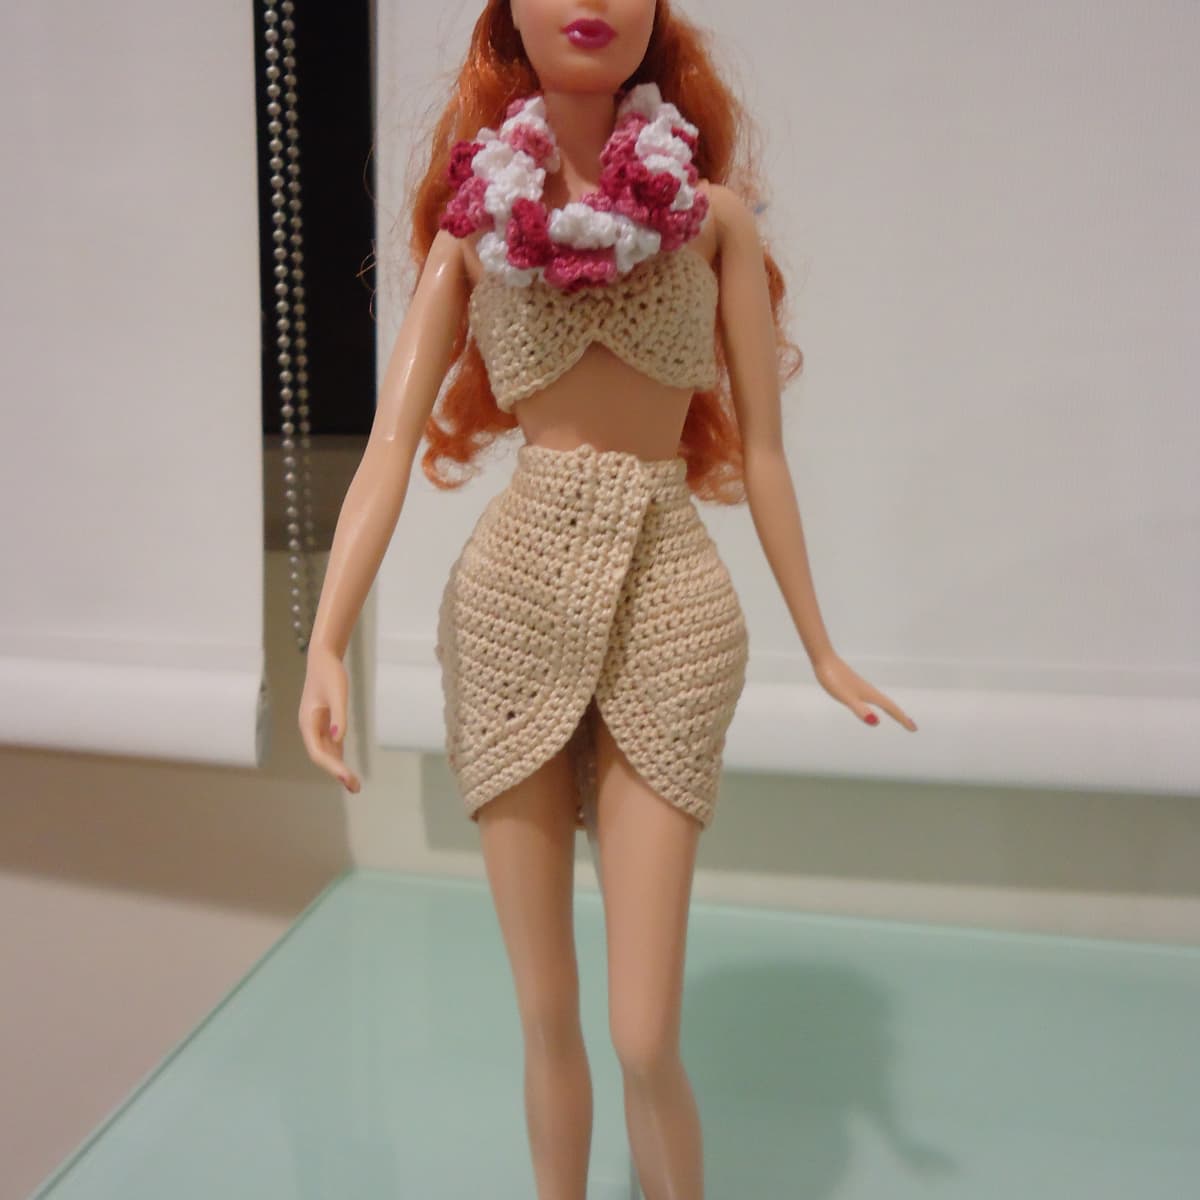 6 Barbie Fashion Doll Patterns You Can Crochet – Crochet